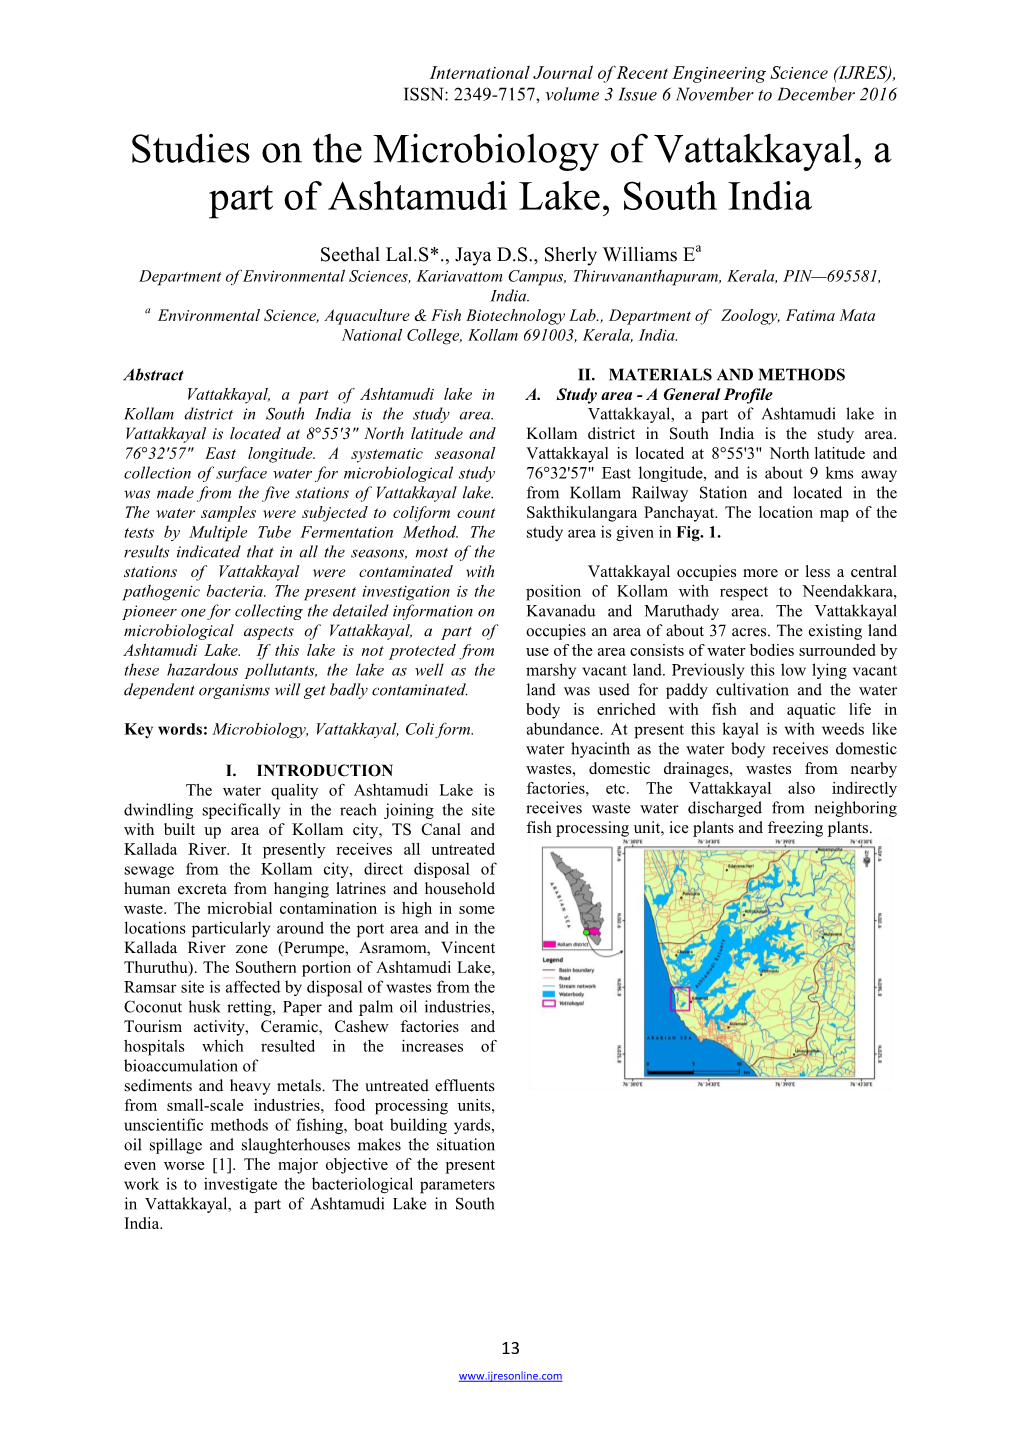 Studies on the Microbiology of Vattakkayal, a Part of Ashtamudi Lake, South India